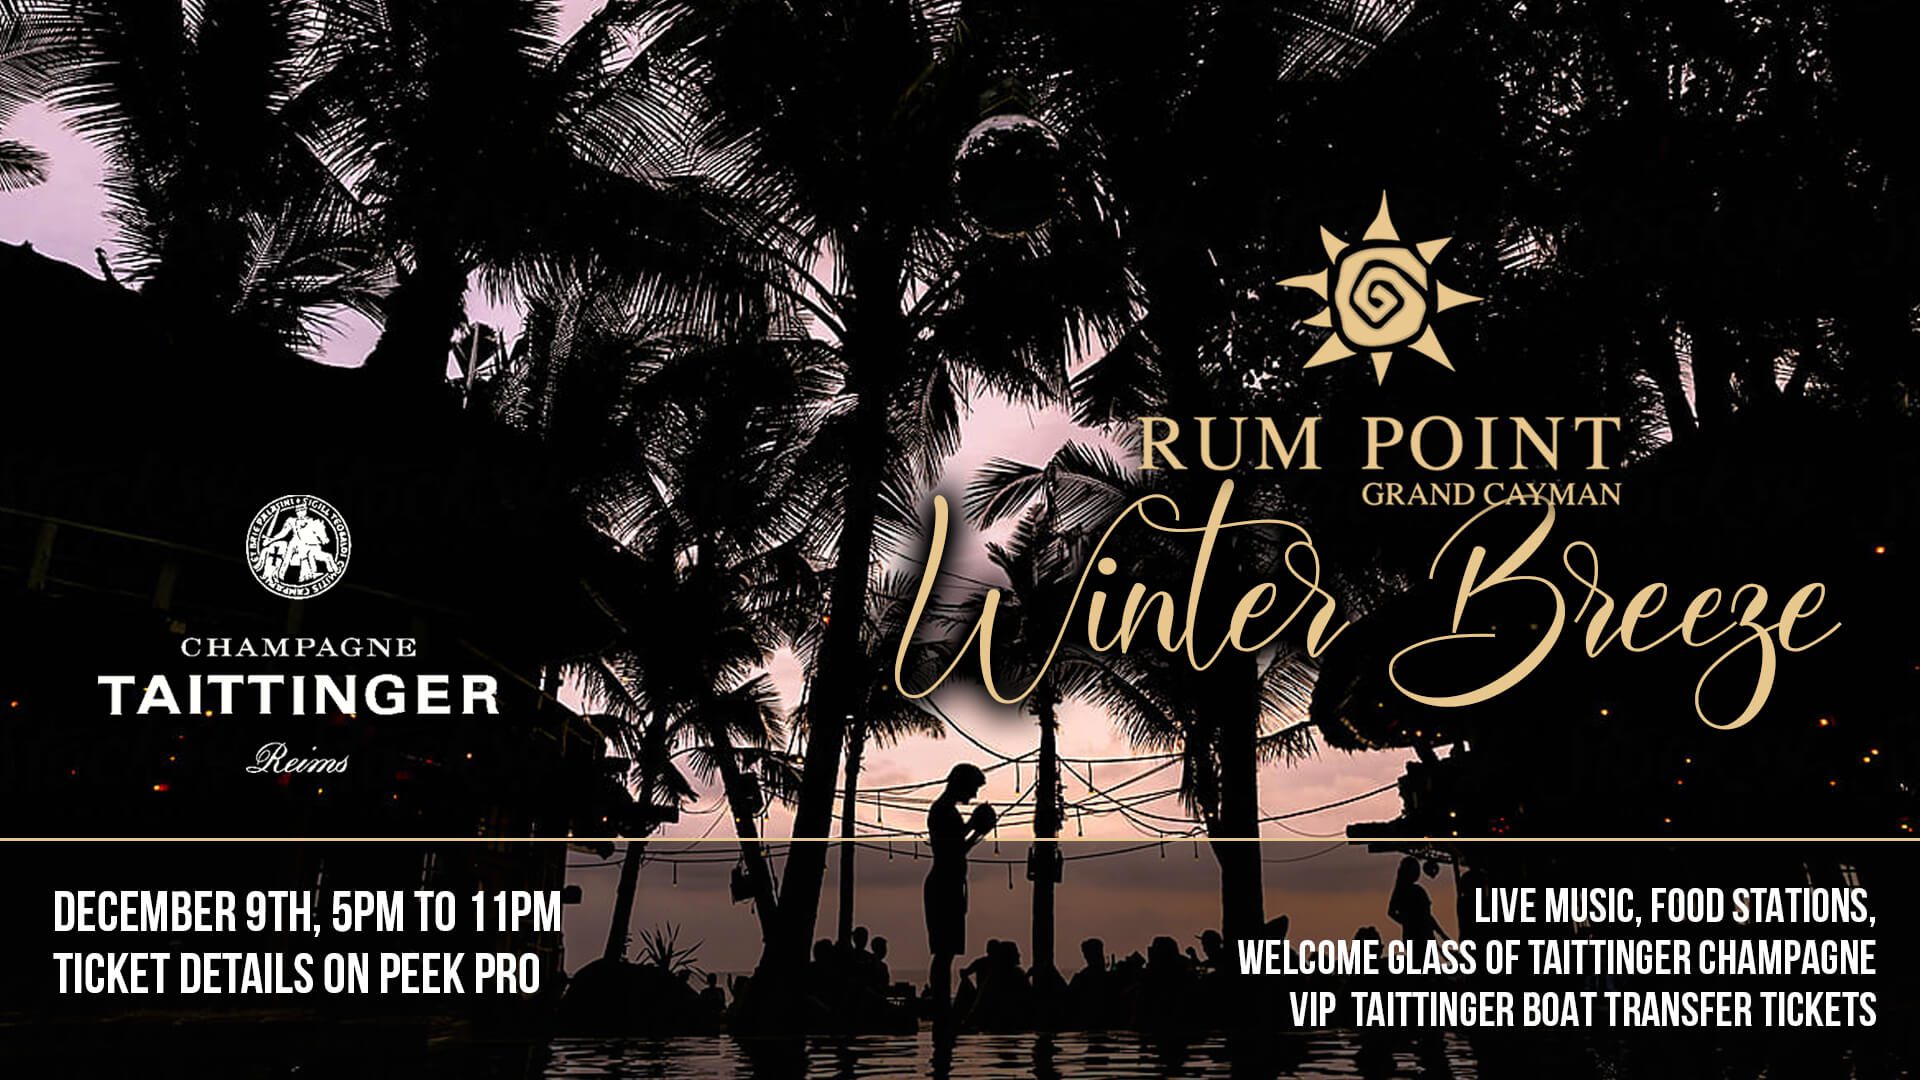 Rum Point Club winter breeze flyer.